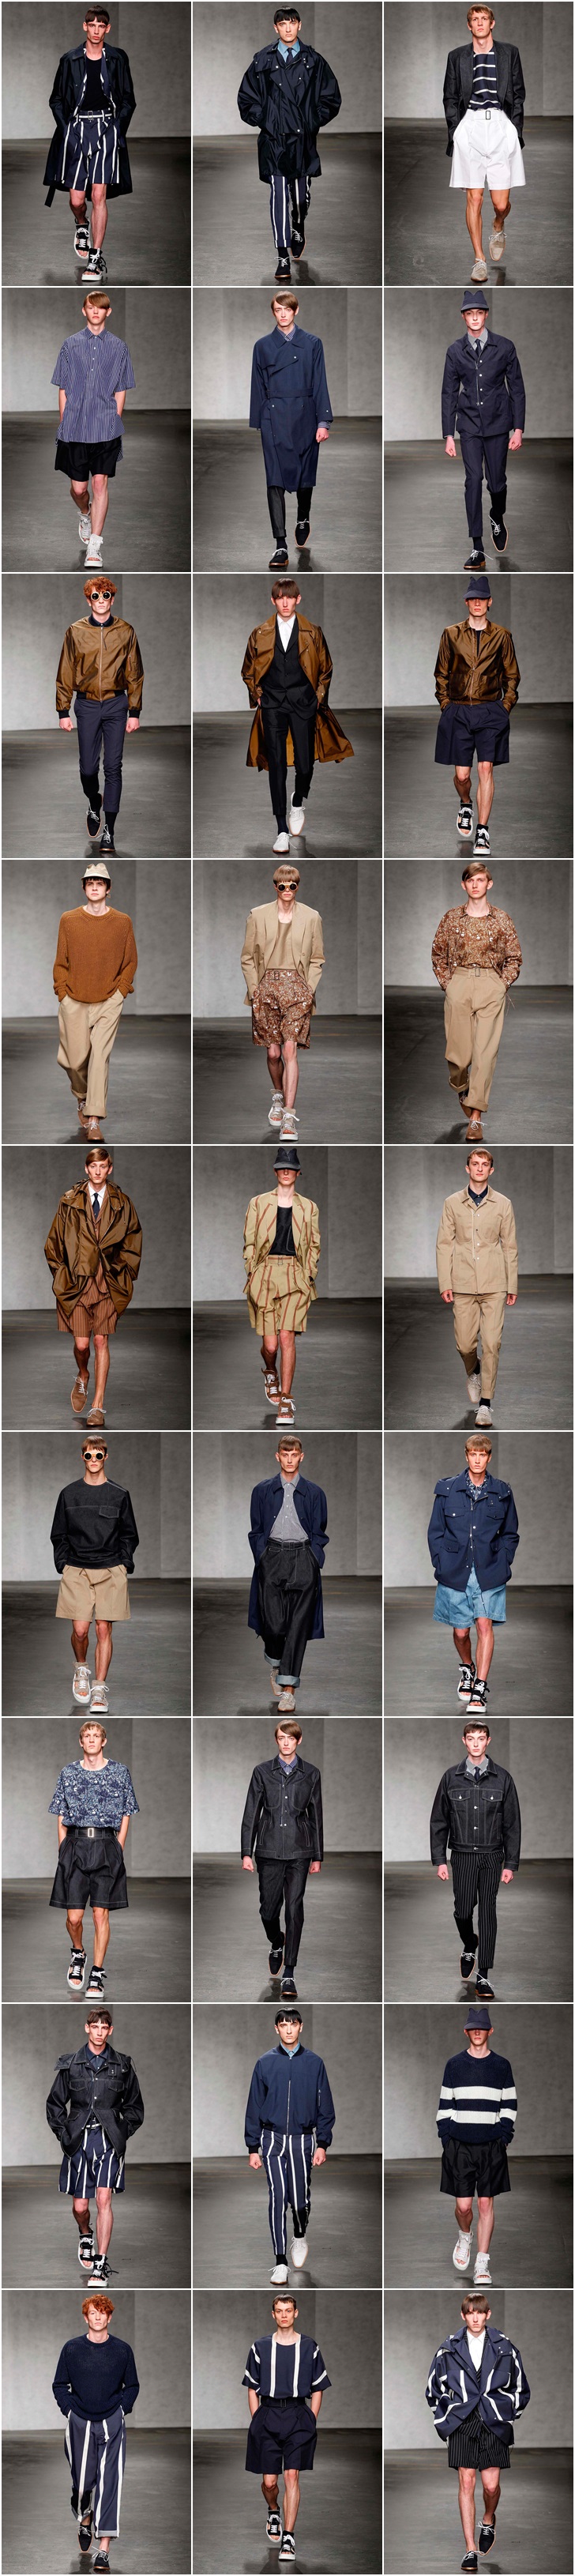 ETautz-Spring-Summer-2015-London-Collections-Men-fashion4addicts